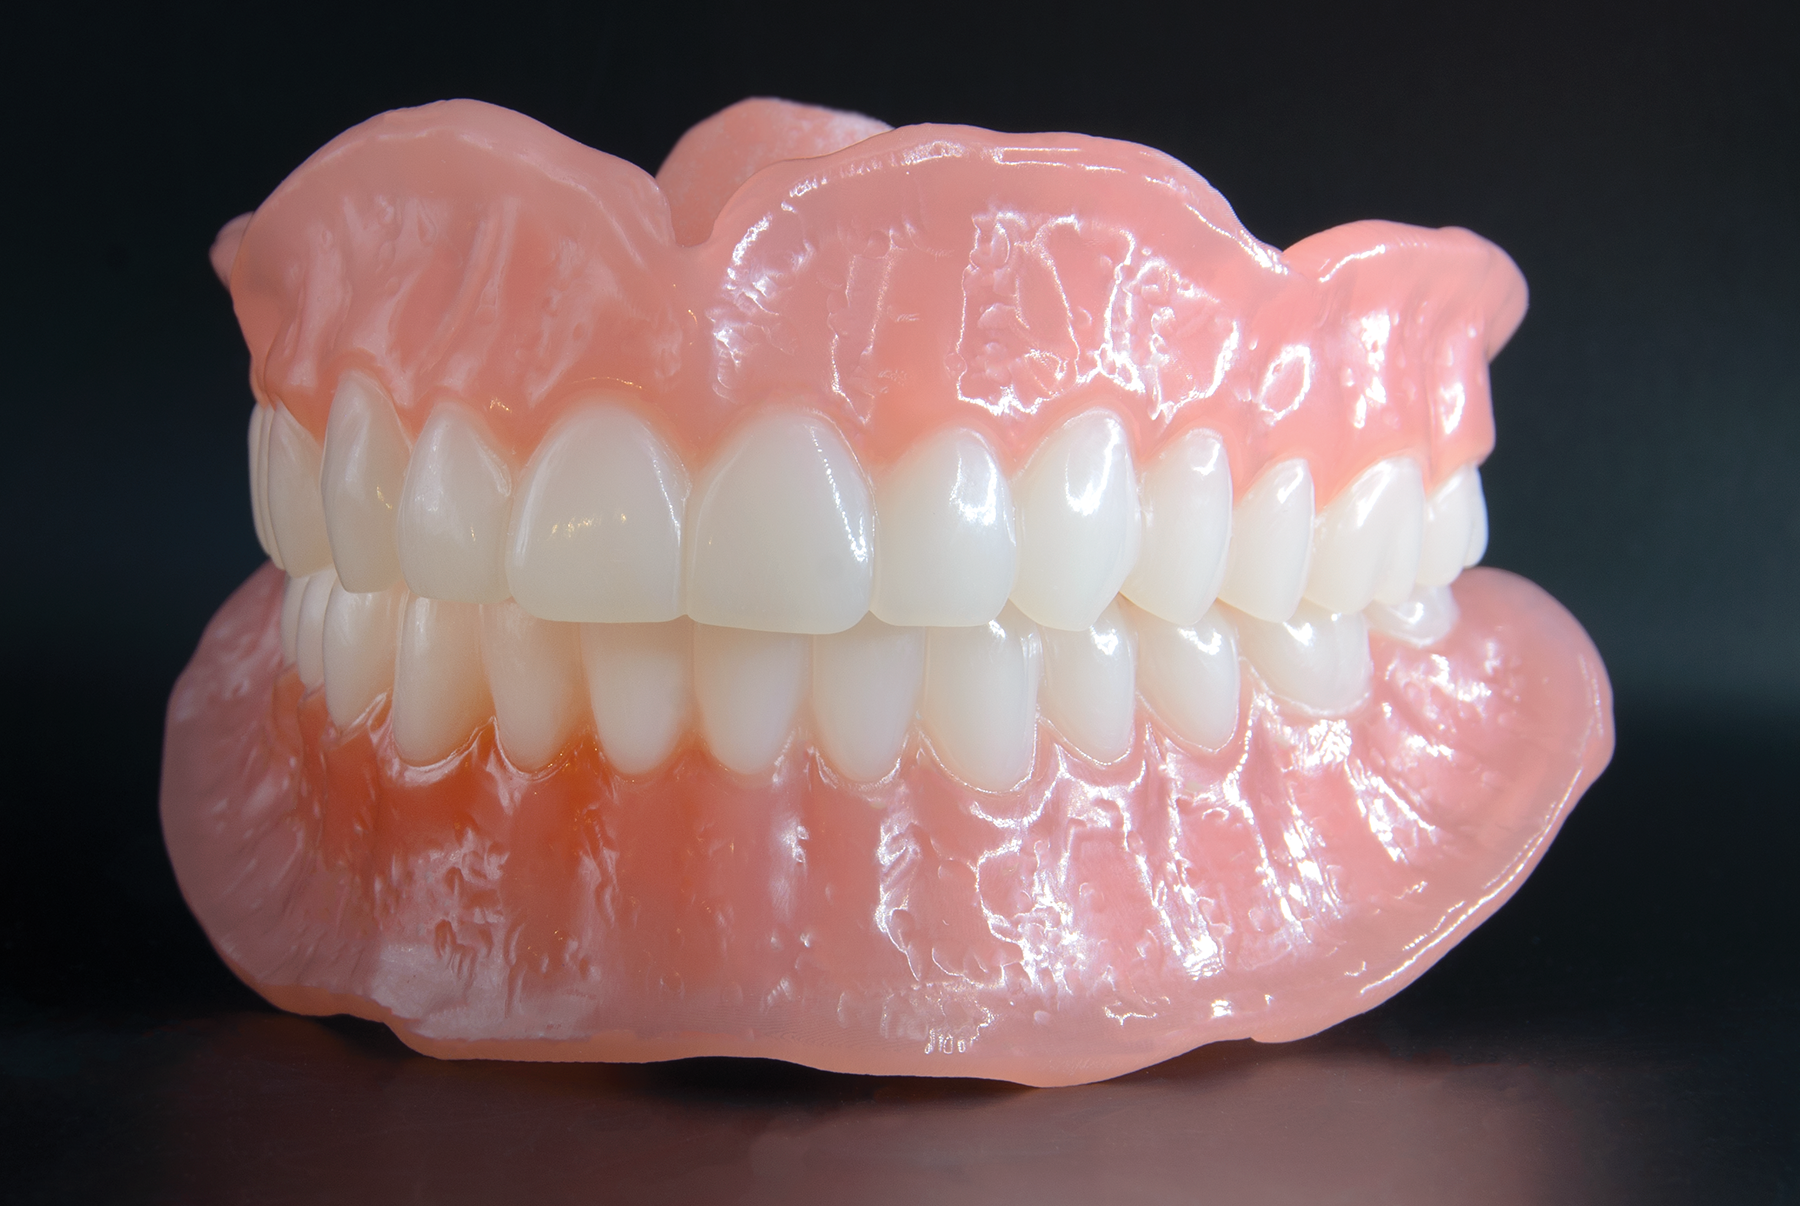 Trusana™ Premium Denture System from Myerson | Image Credit: © Myerson